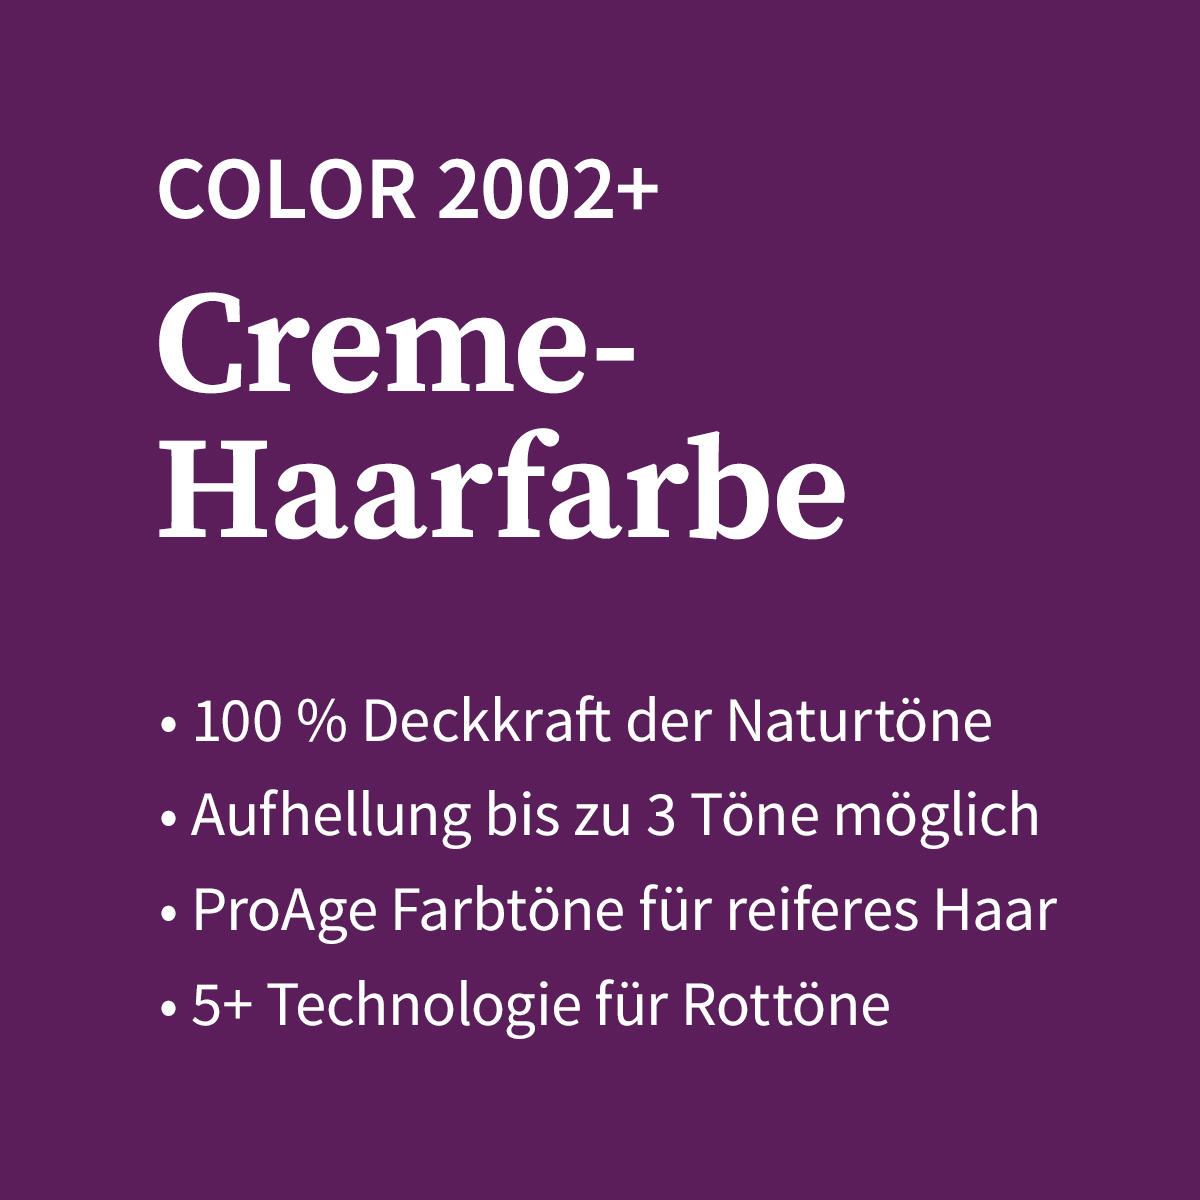 Basler Color 2002+ Cremehaarfarbe 8/1 hellblond asch, Tube 60 ml - 4